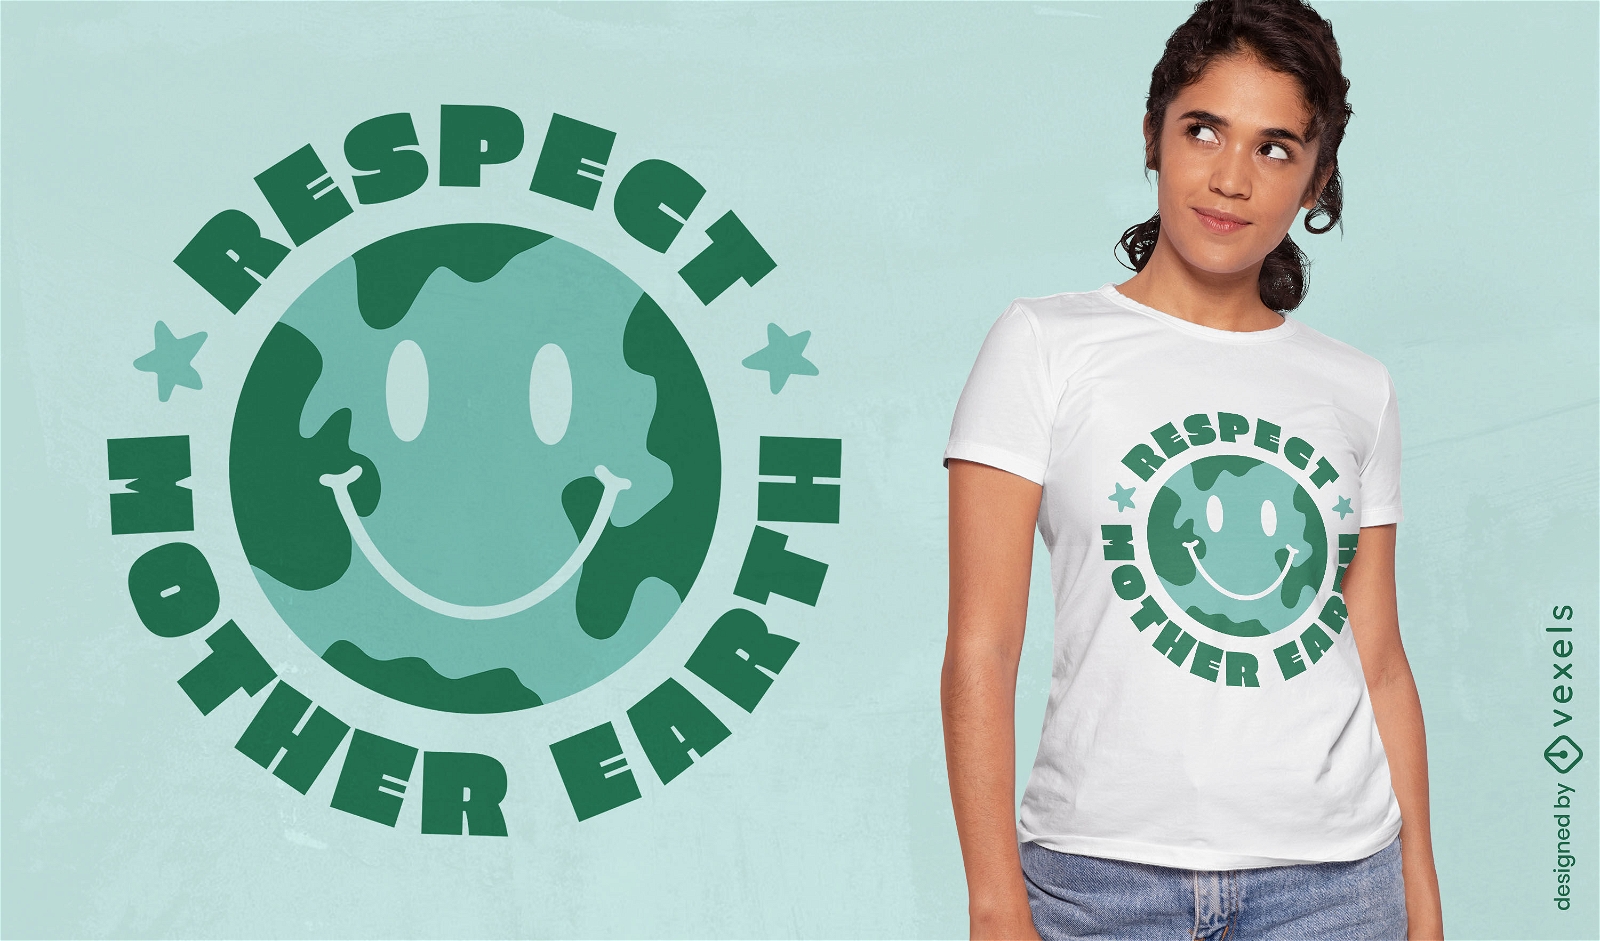 Respect Mother Earth lettering t-shirt design